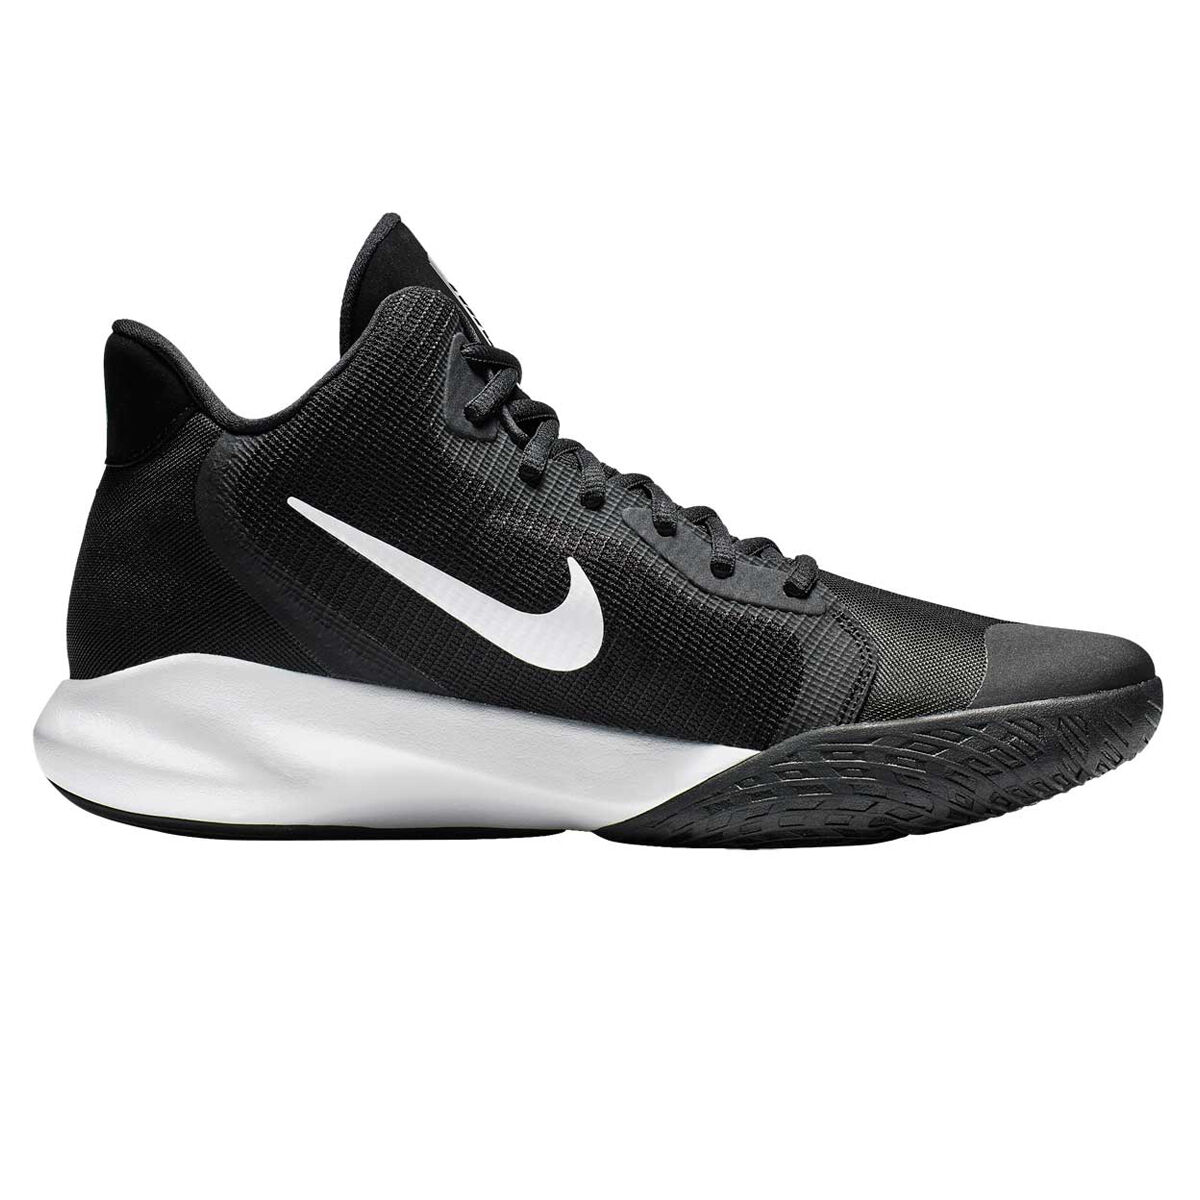 rebel sport basketball shoes